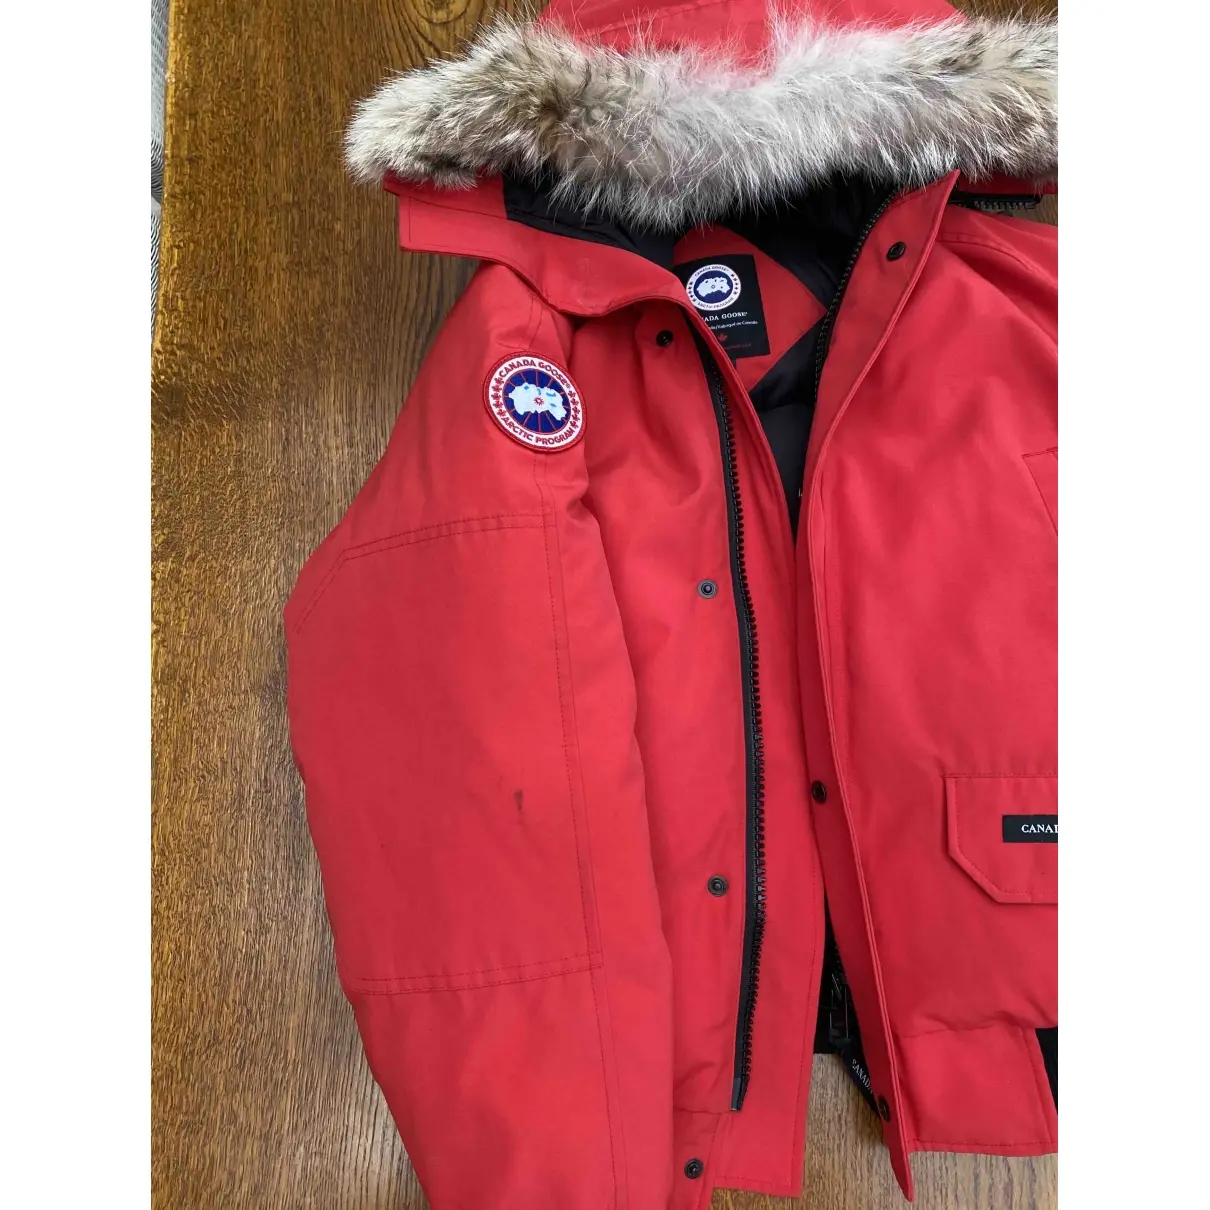 Buy Canada Goose Red Synthetic Coat online